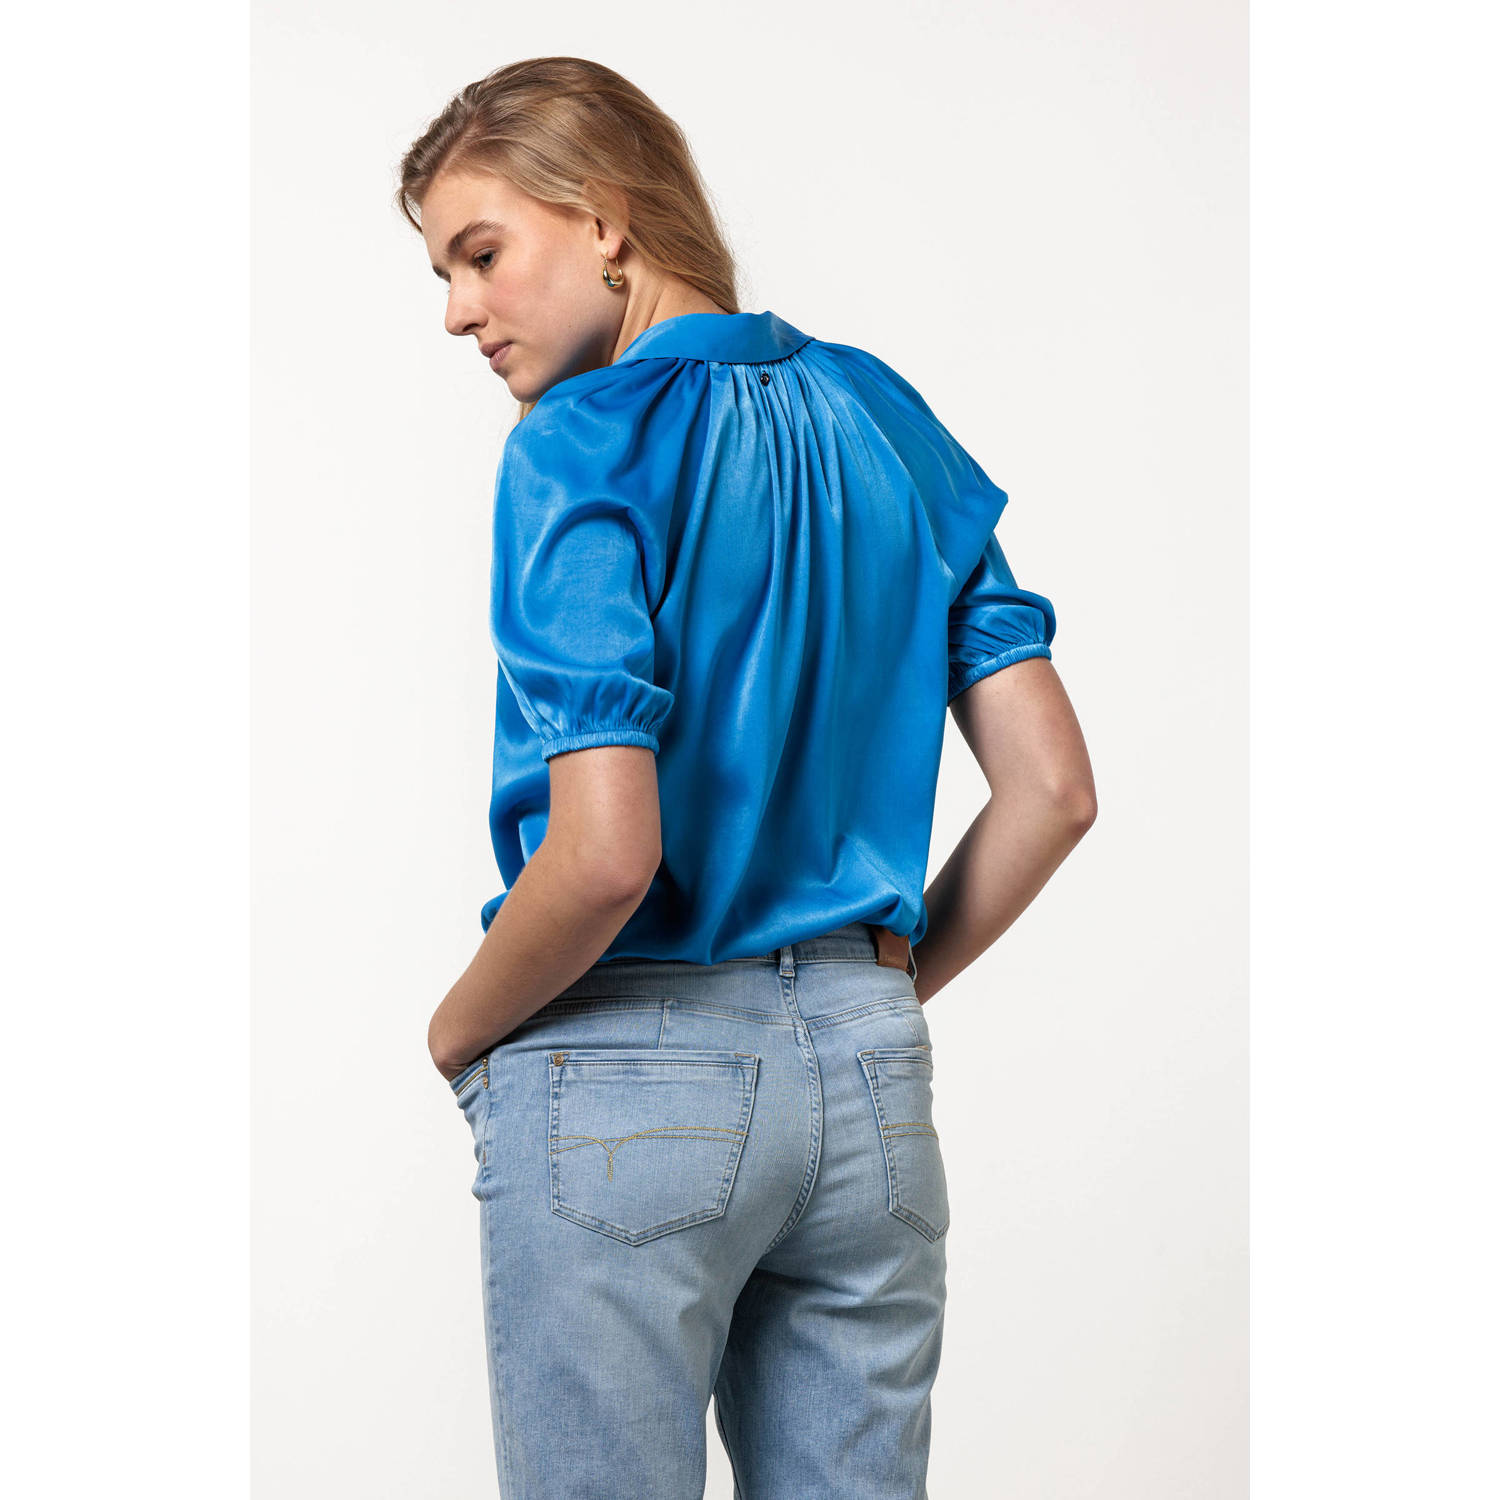 Tramontana blousetop blauw